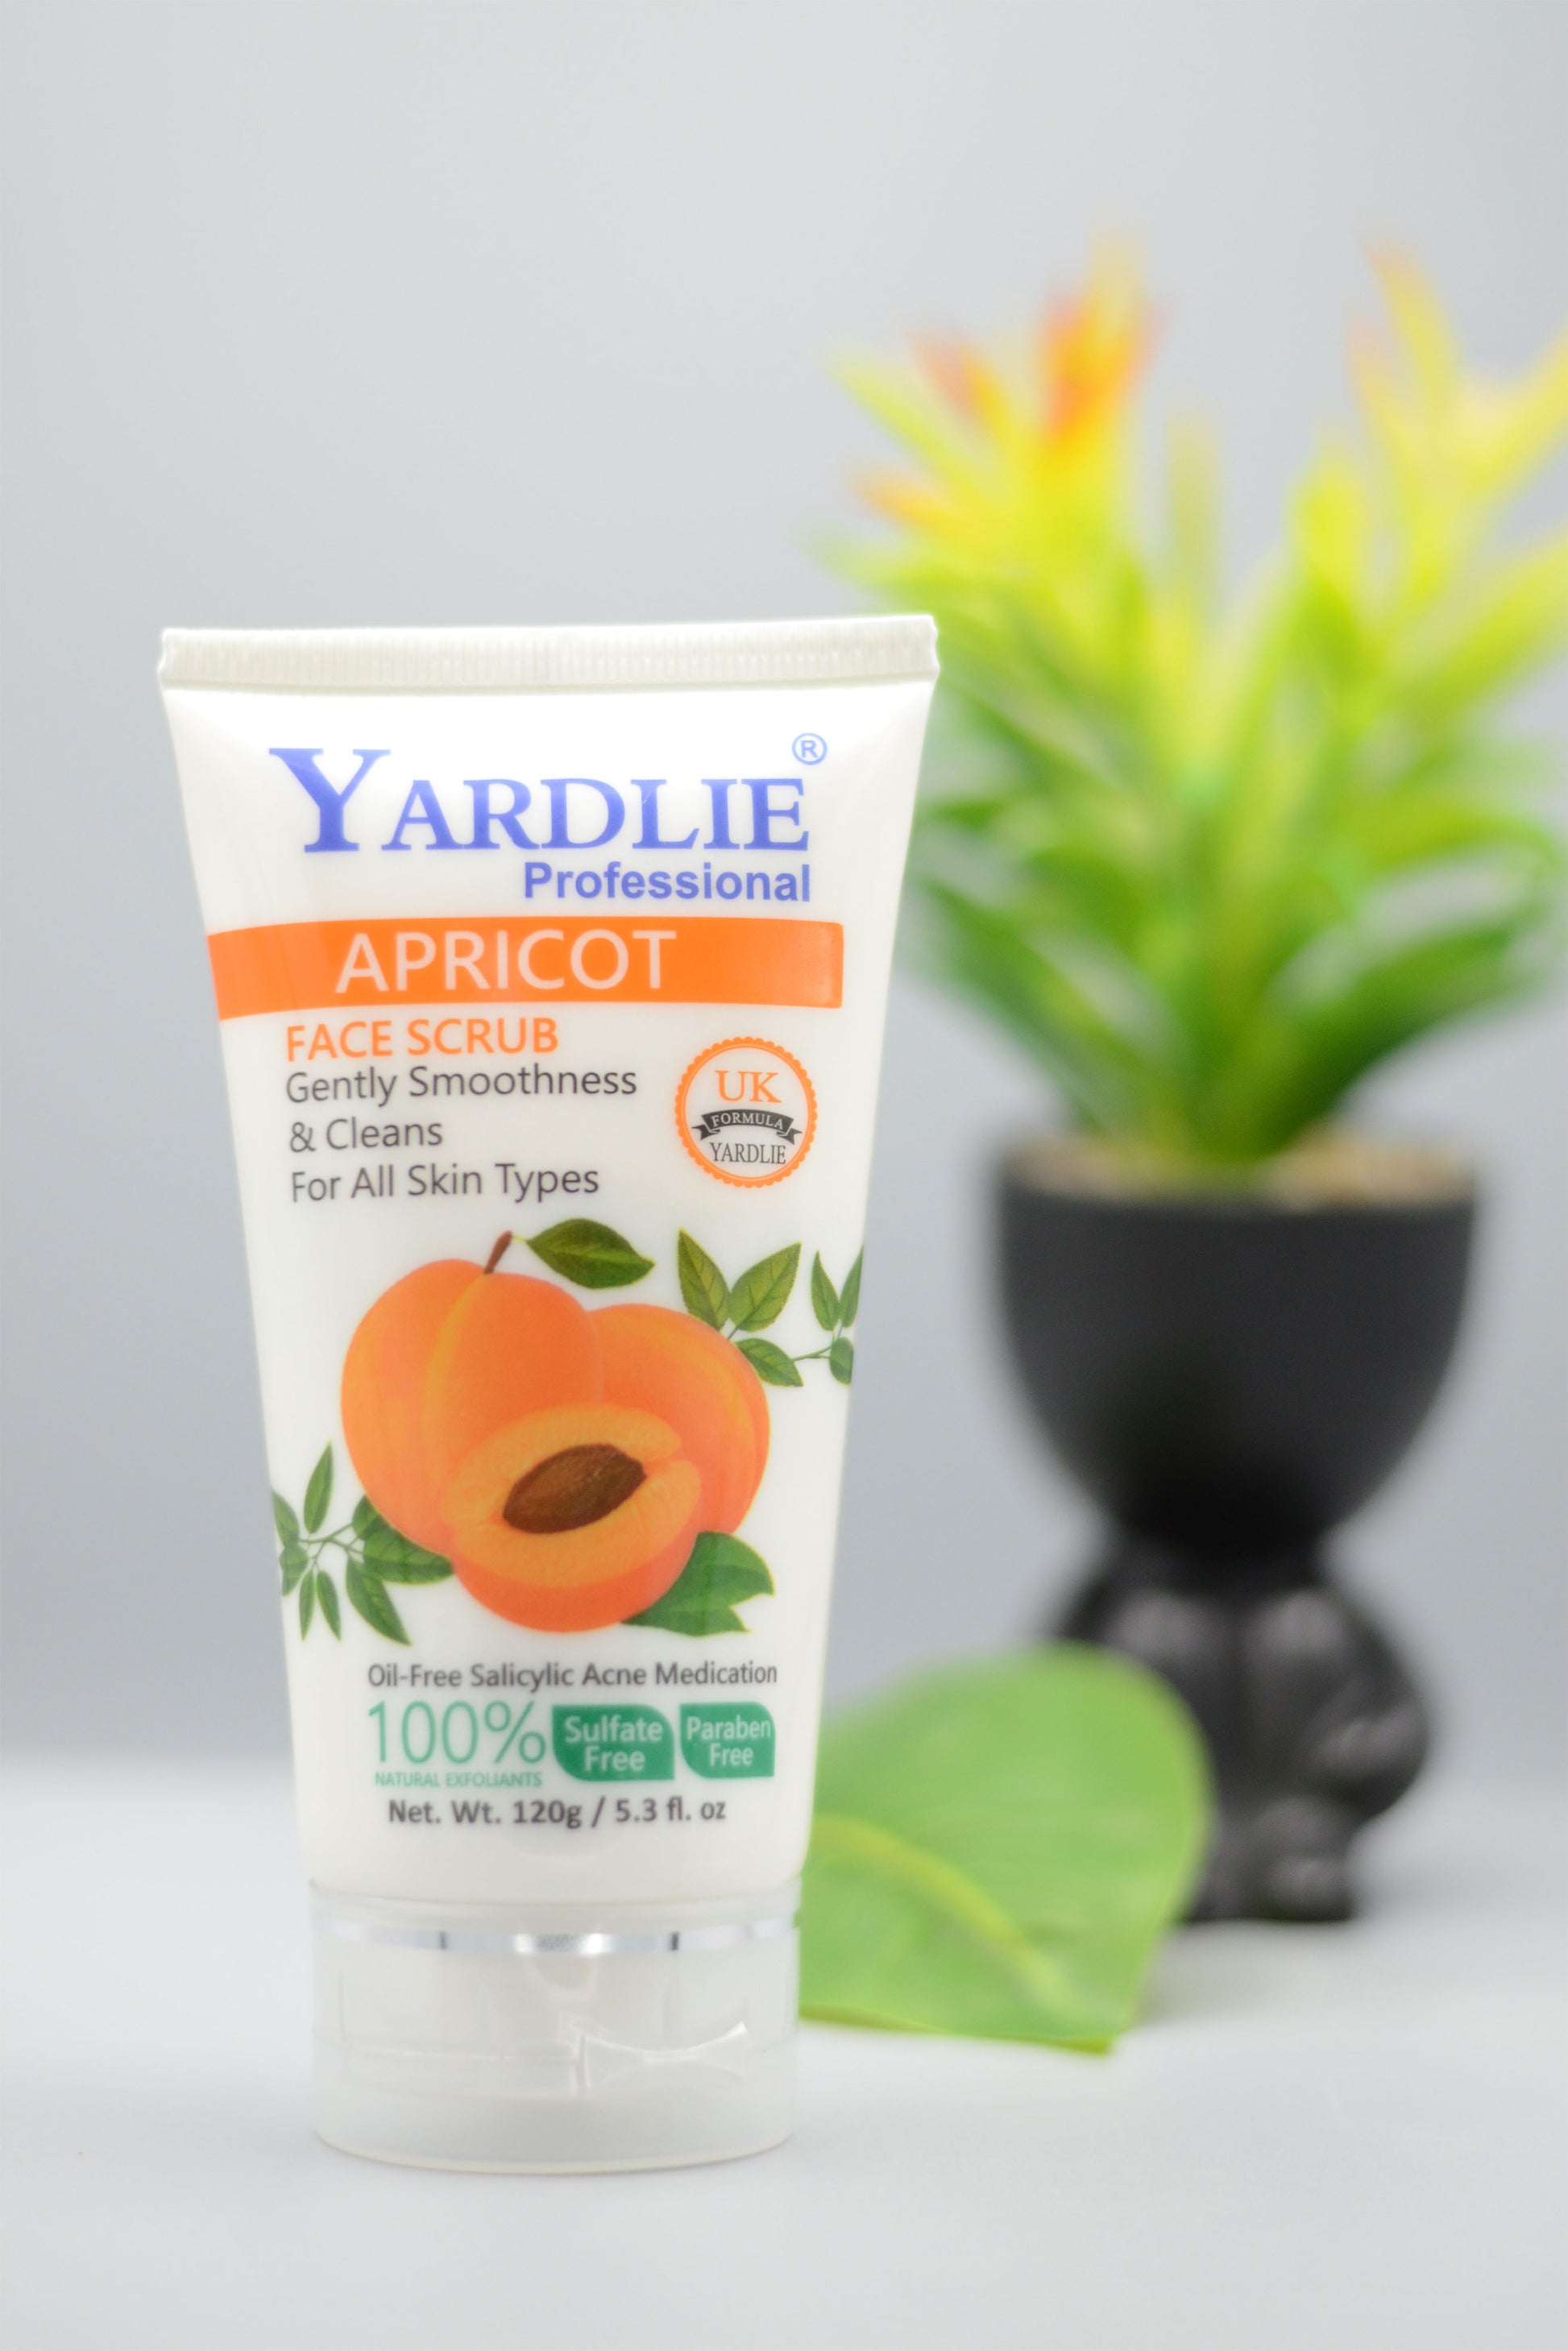 Yardlie Professional Apricot Face Scrub 120g.